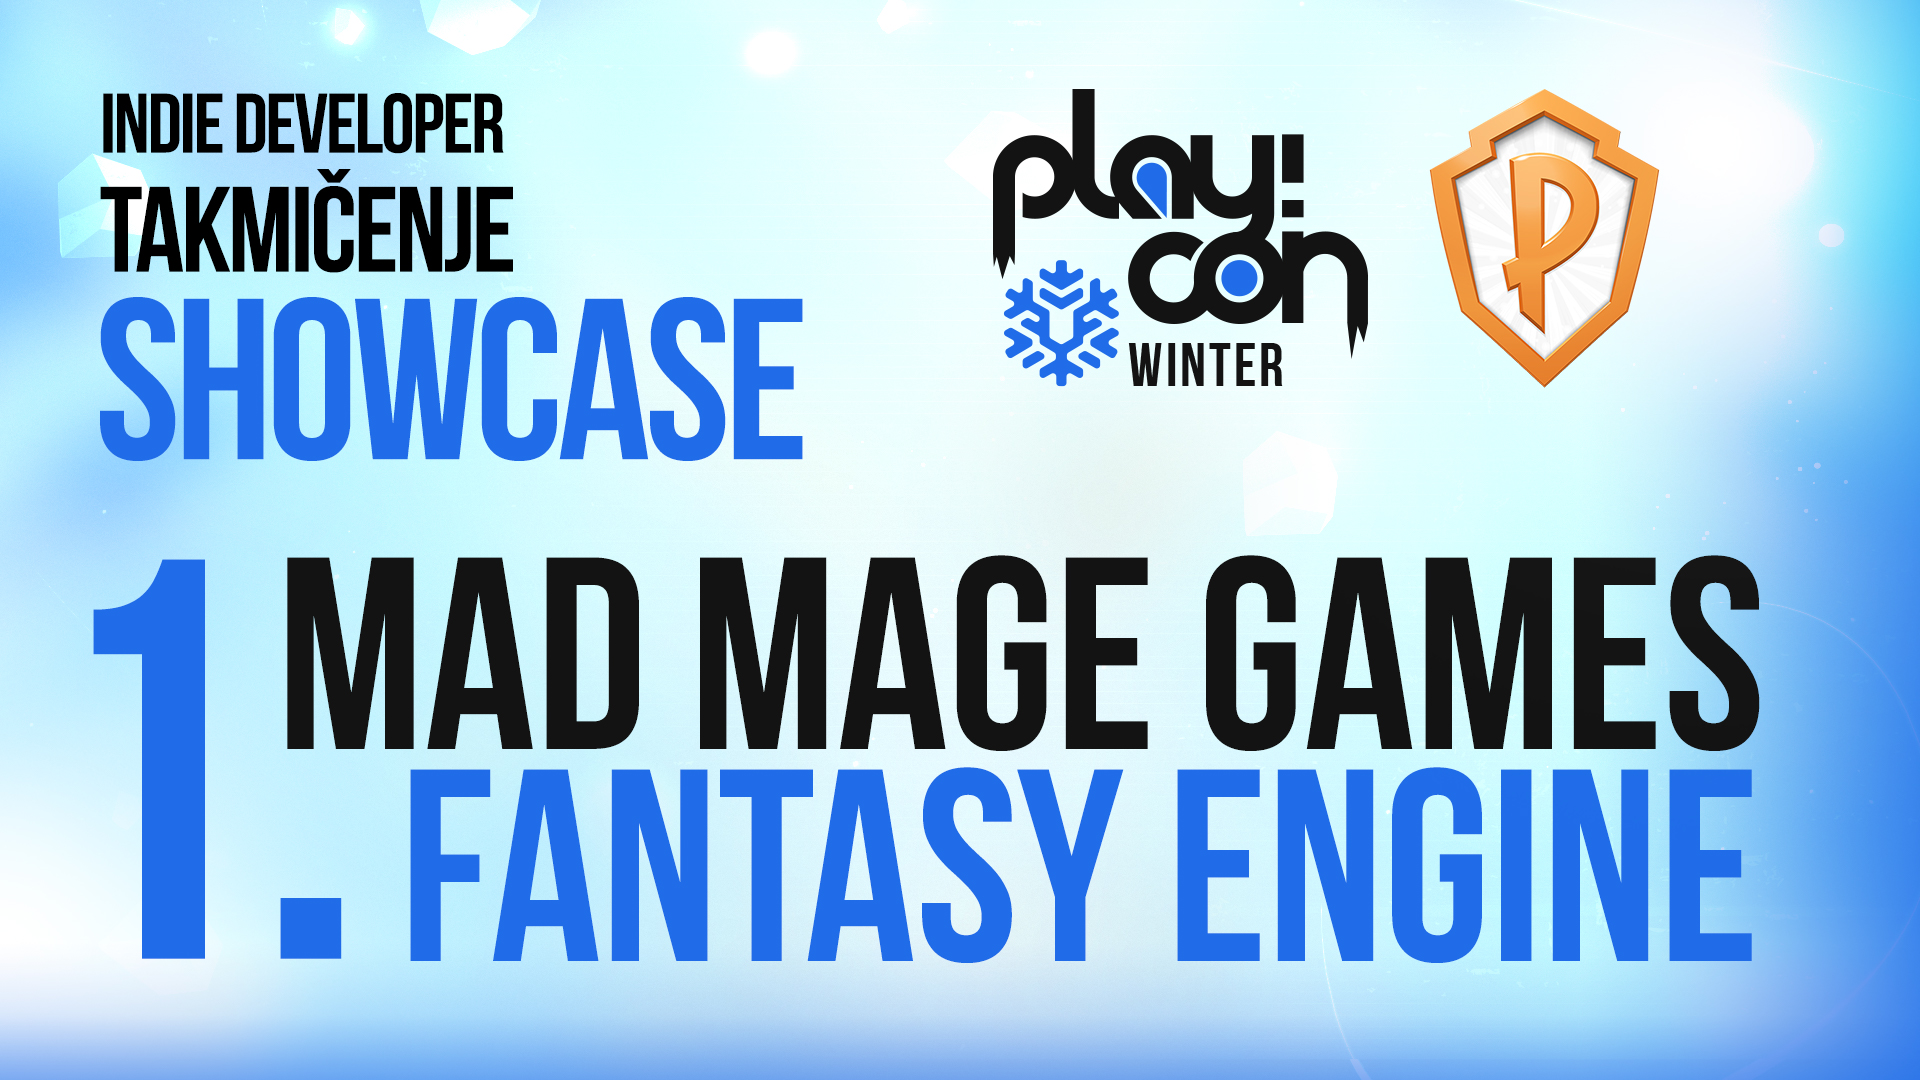 madmagegames-fantasyengine-playconindiedev